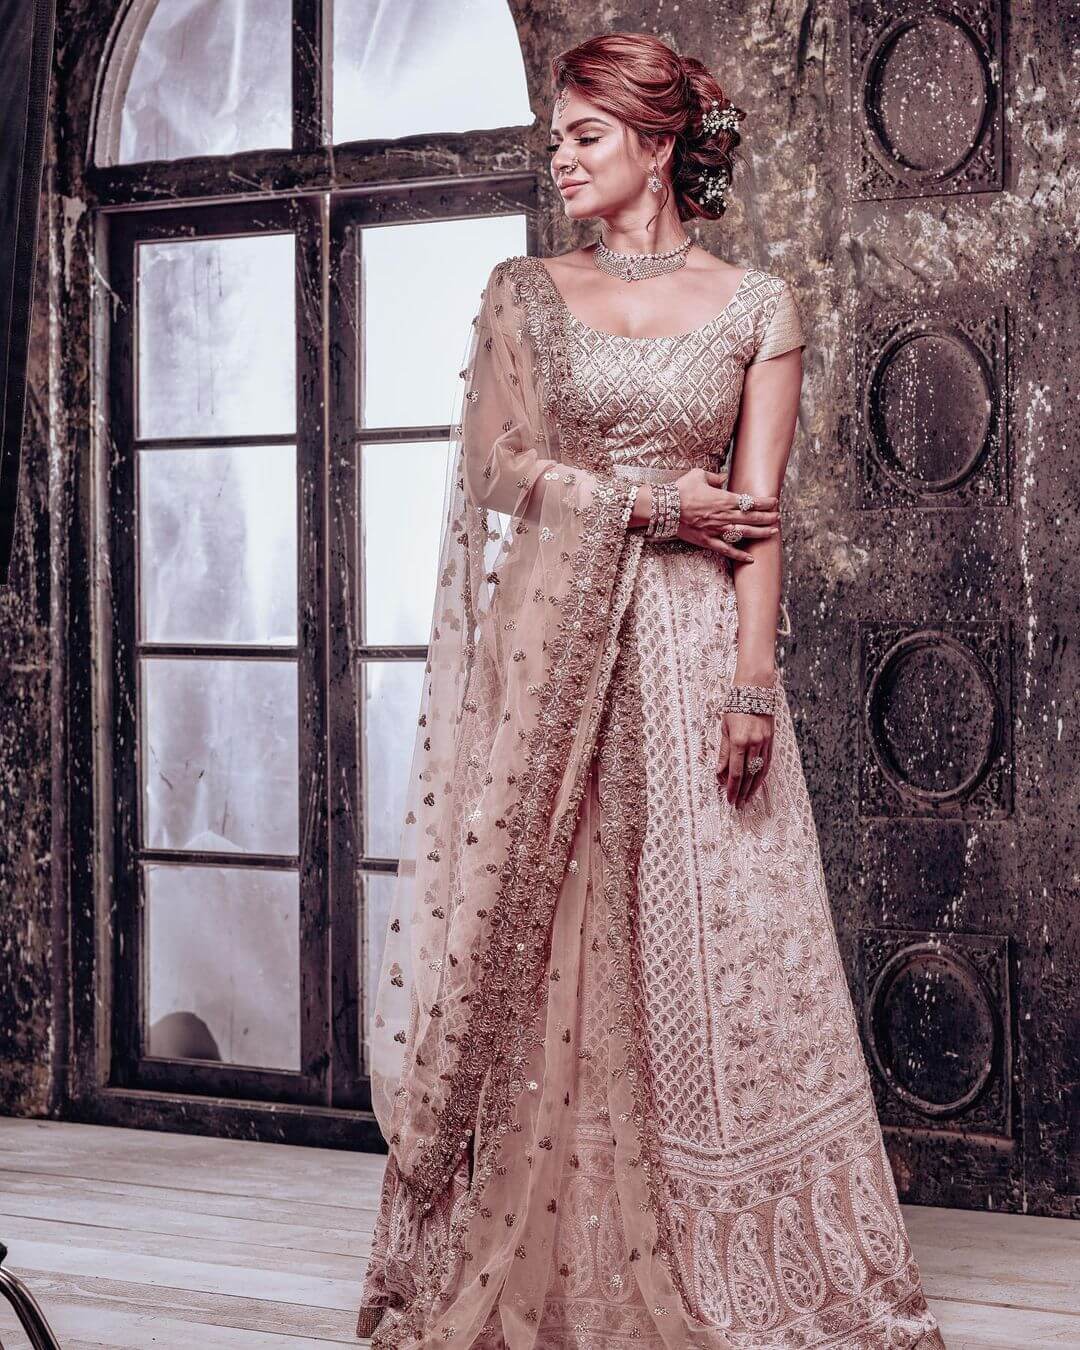 Aashika Goradia Elegant Look In Golden Lehenga Outfit Aashka Goradia Sexy Outfit And Looks